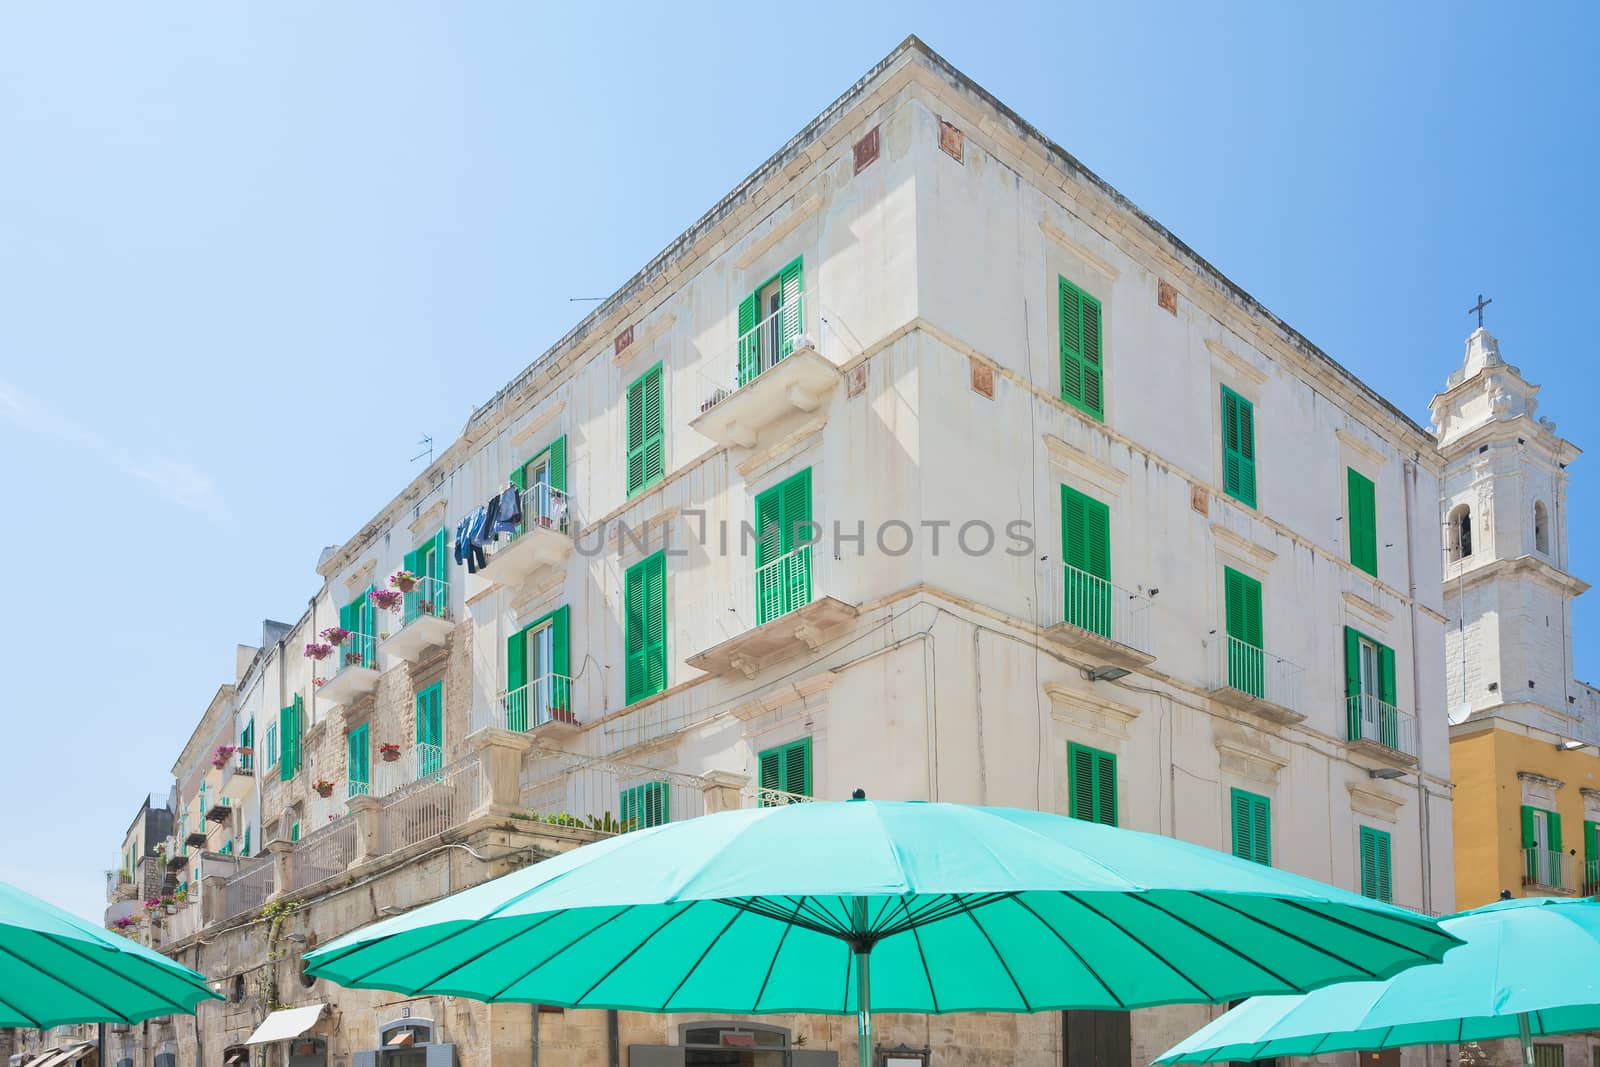 Molfetta, Apulia, Italy - Turquoise sunshades and lattice blinds in the streets of Molfetta